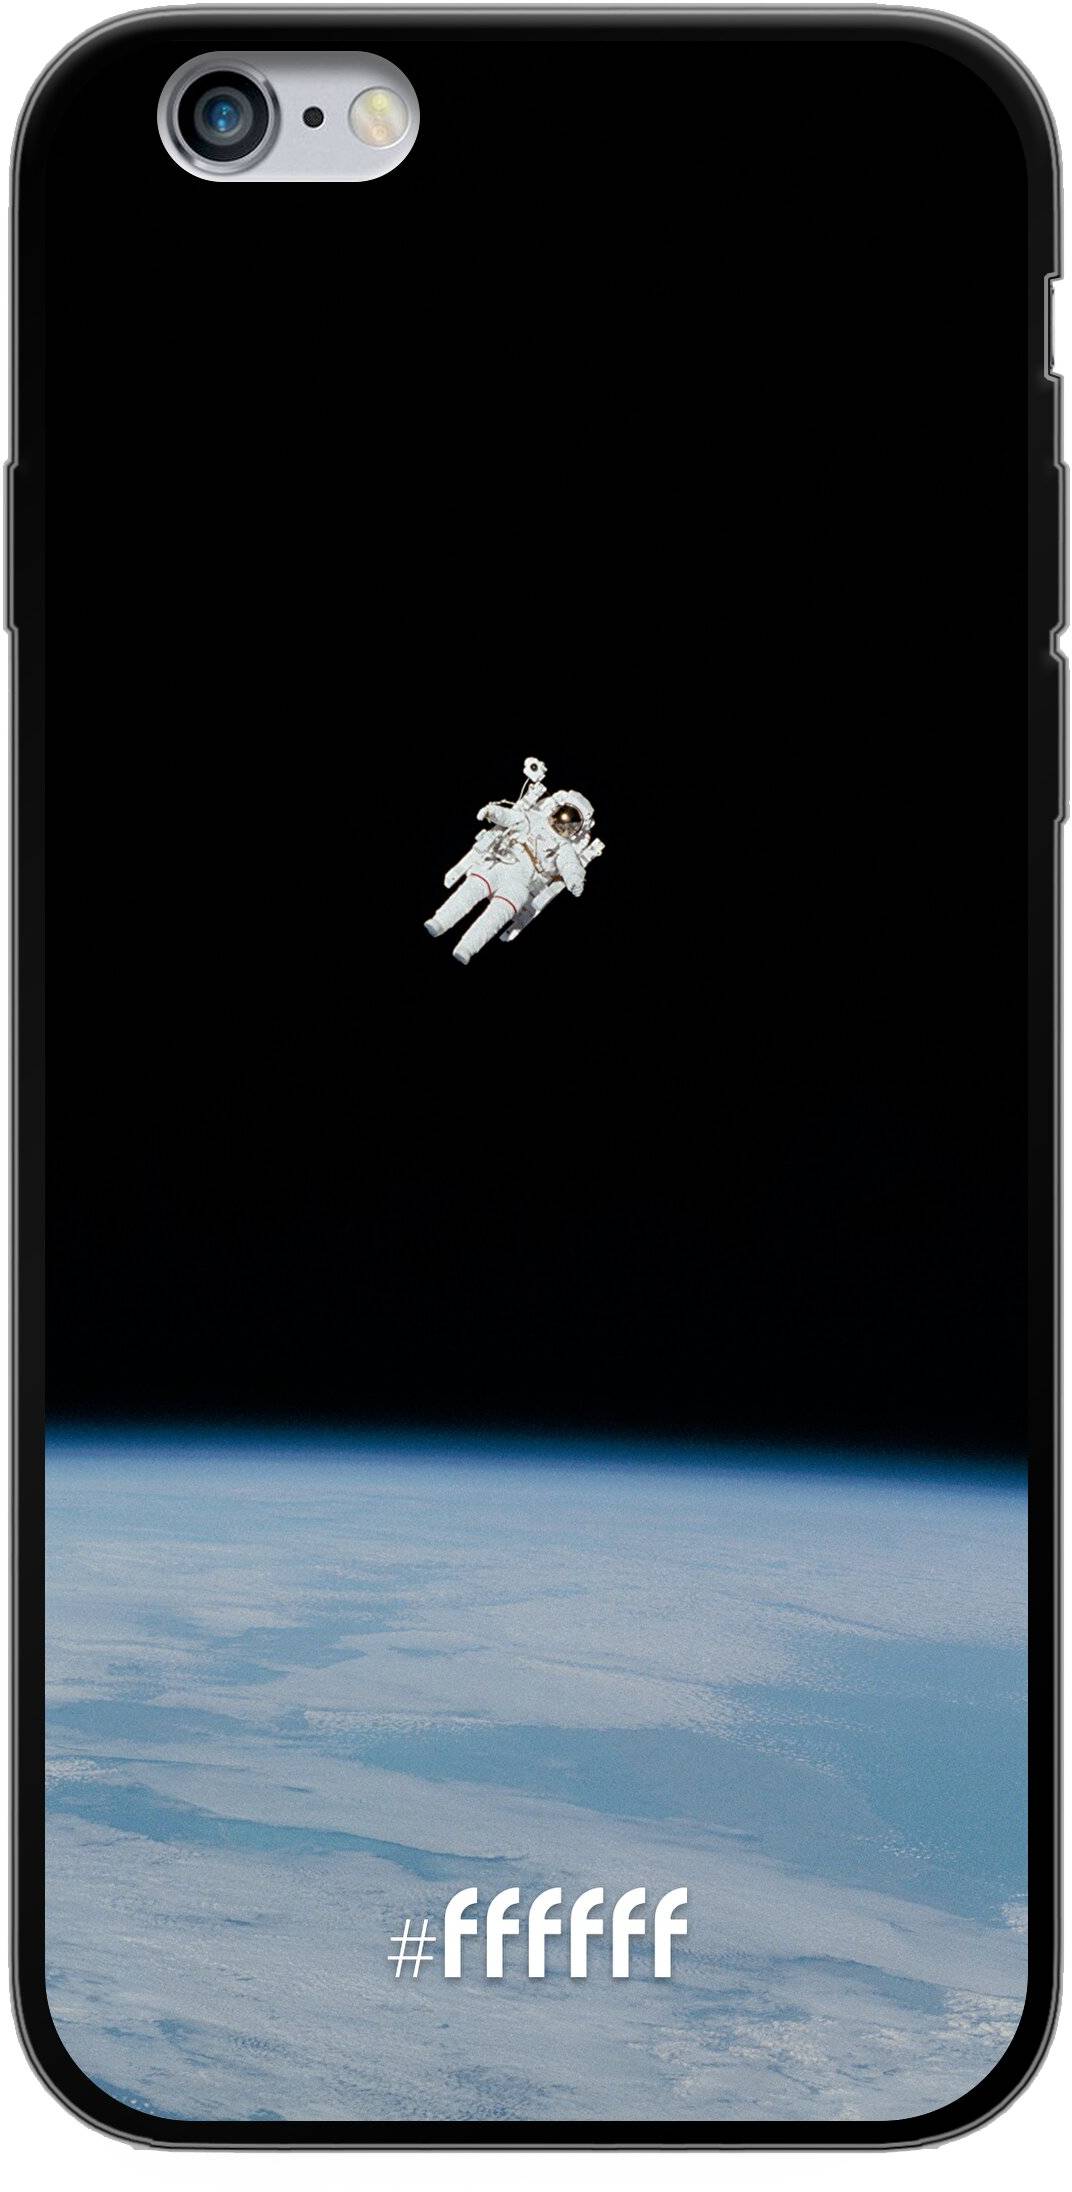 Spacewalk iPhone 6s